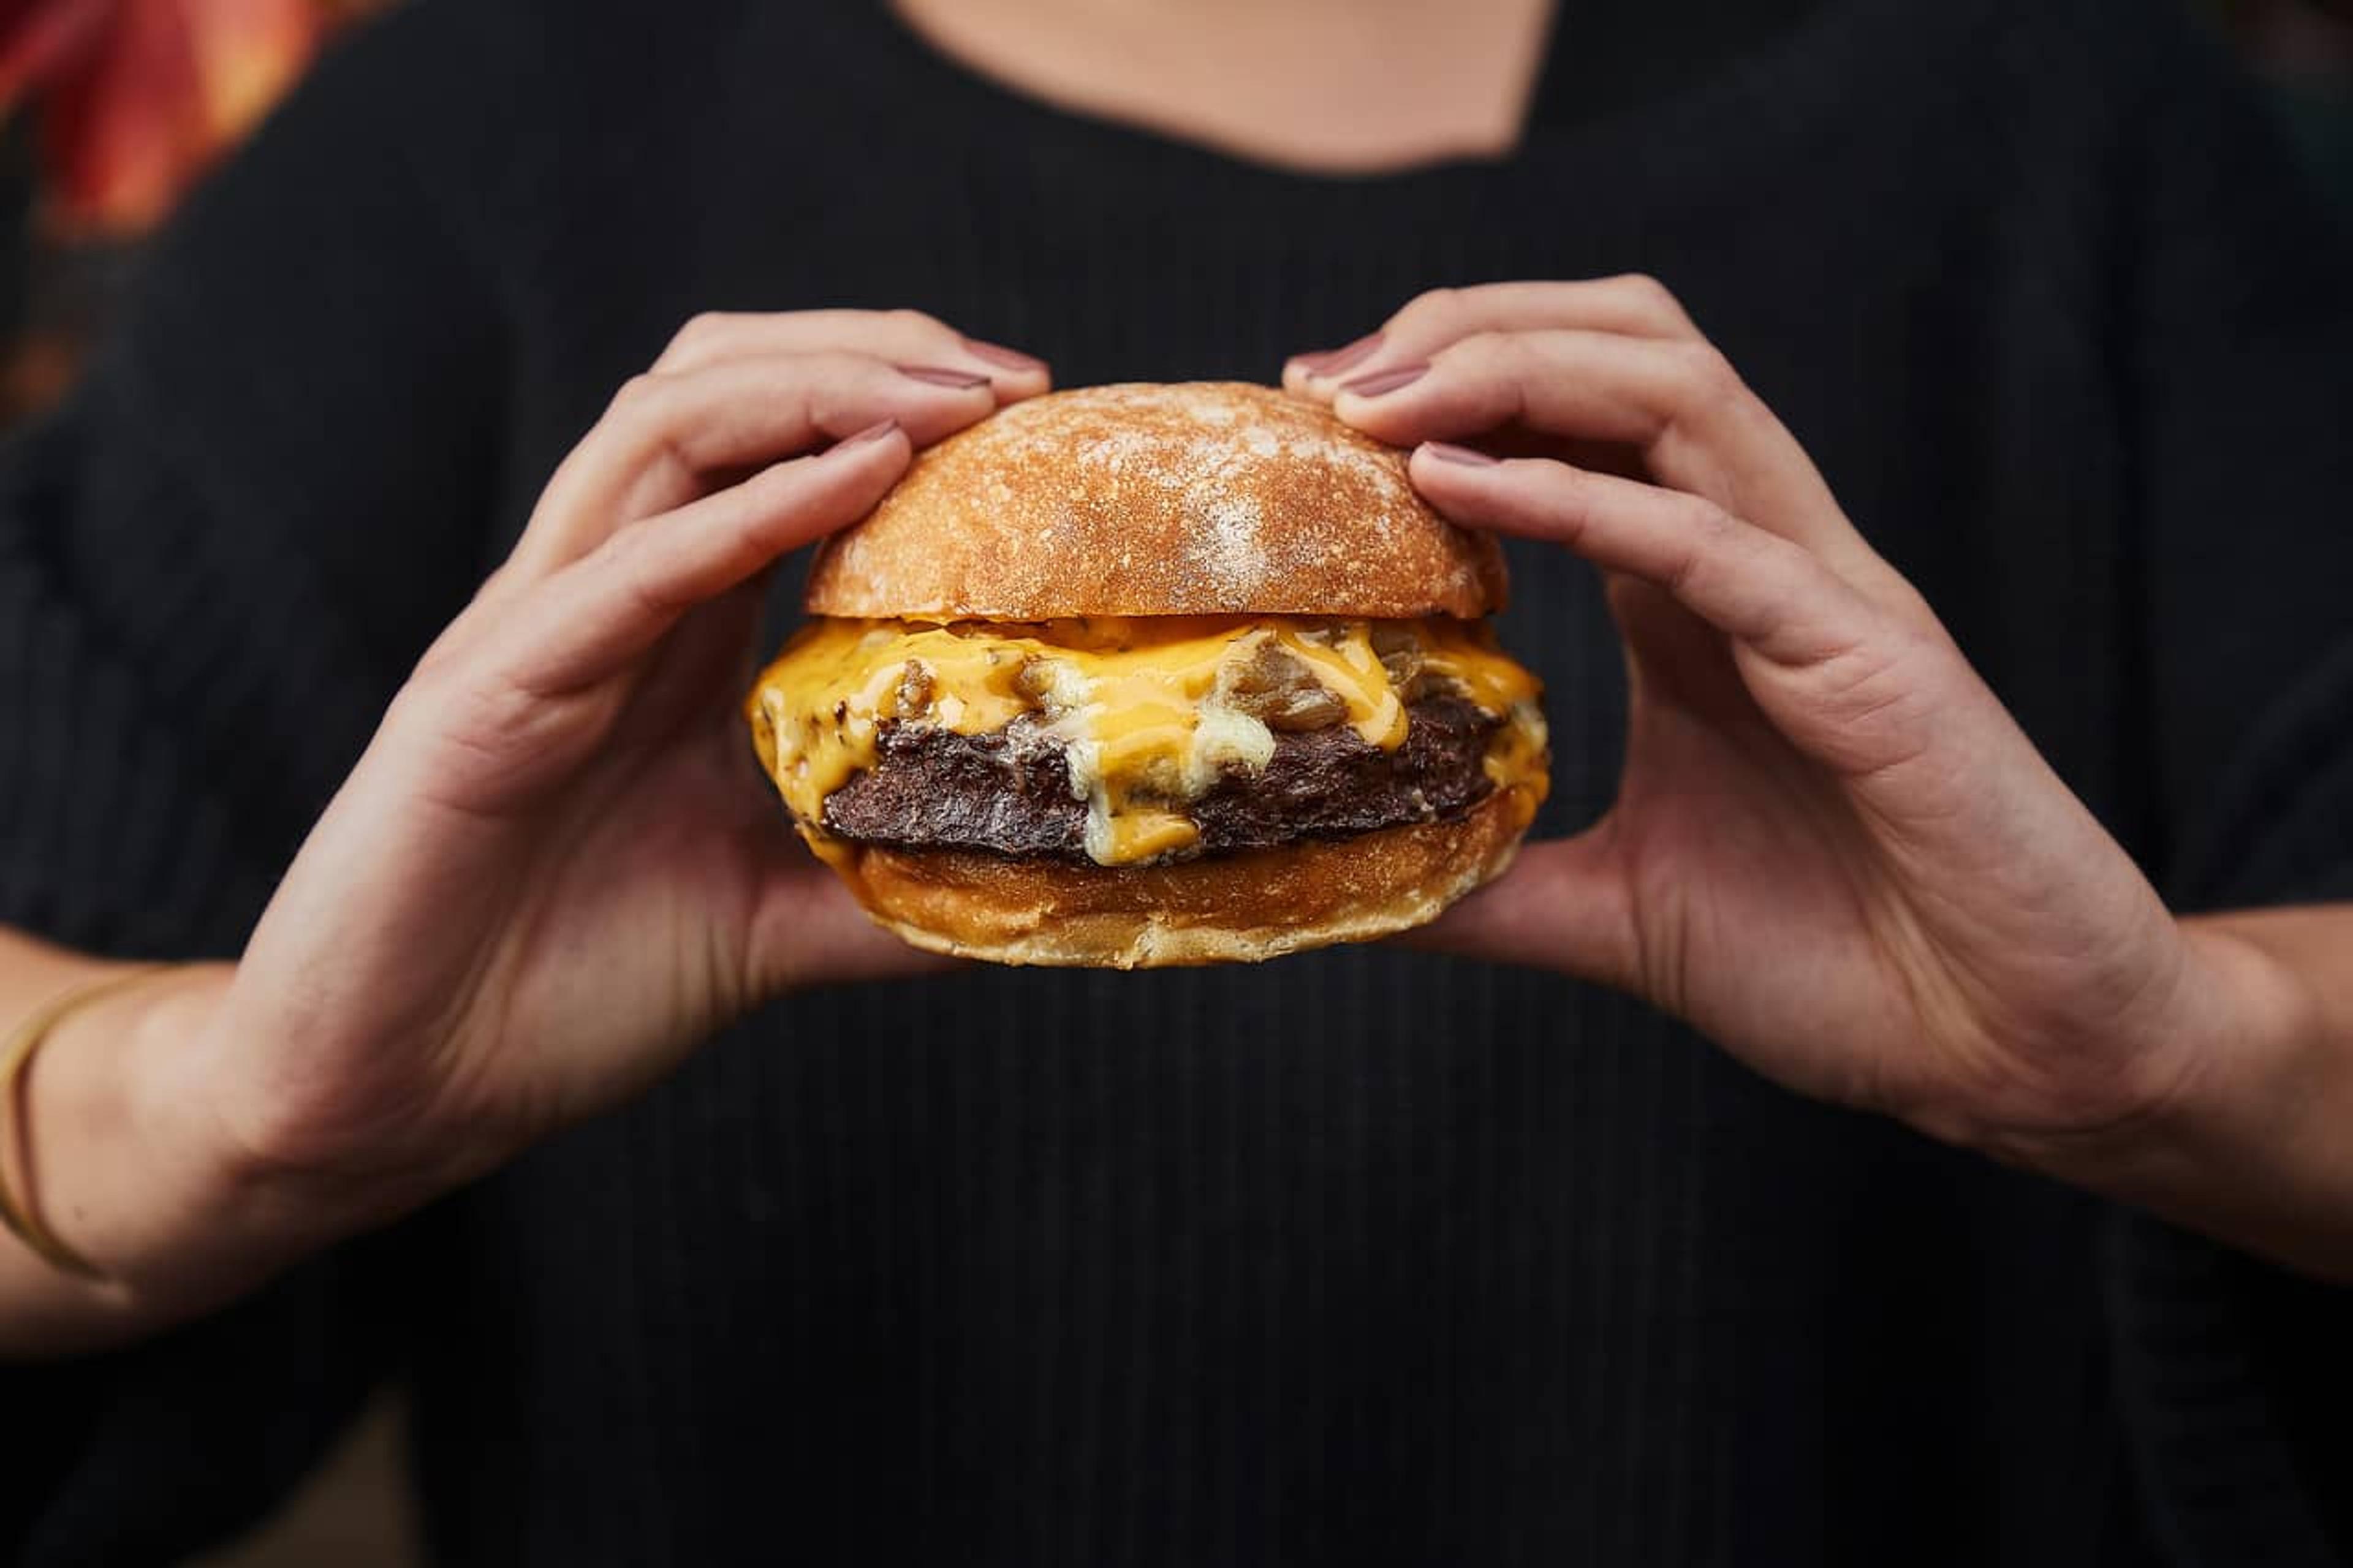 A person holding a cheeseburger.